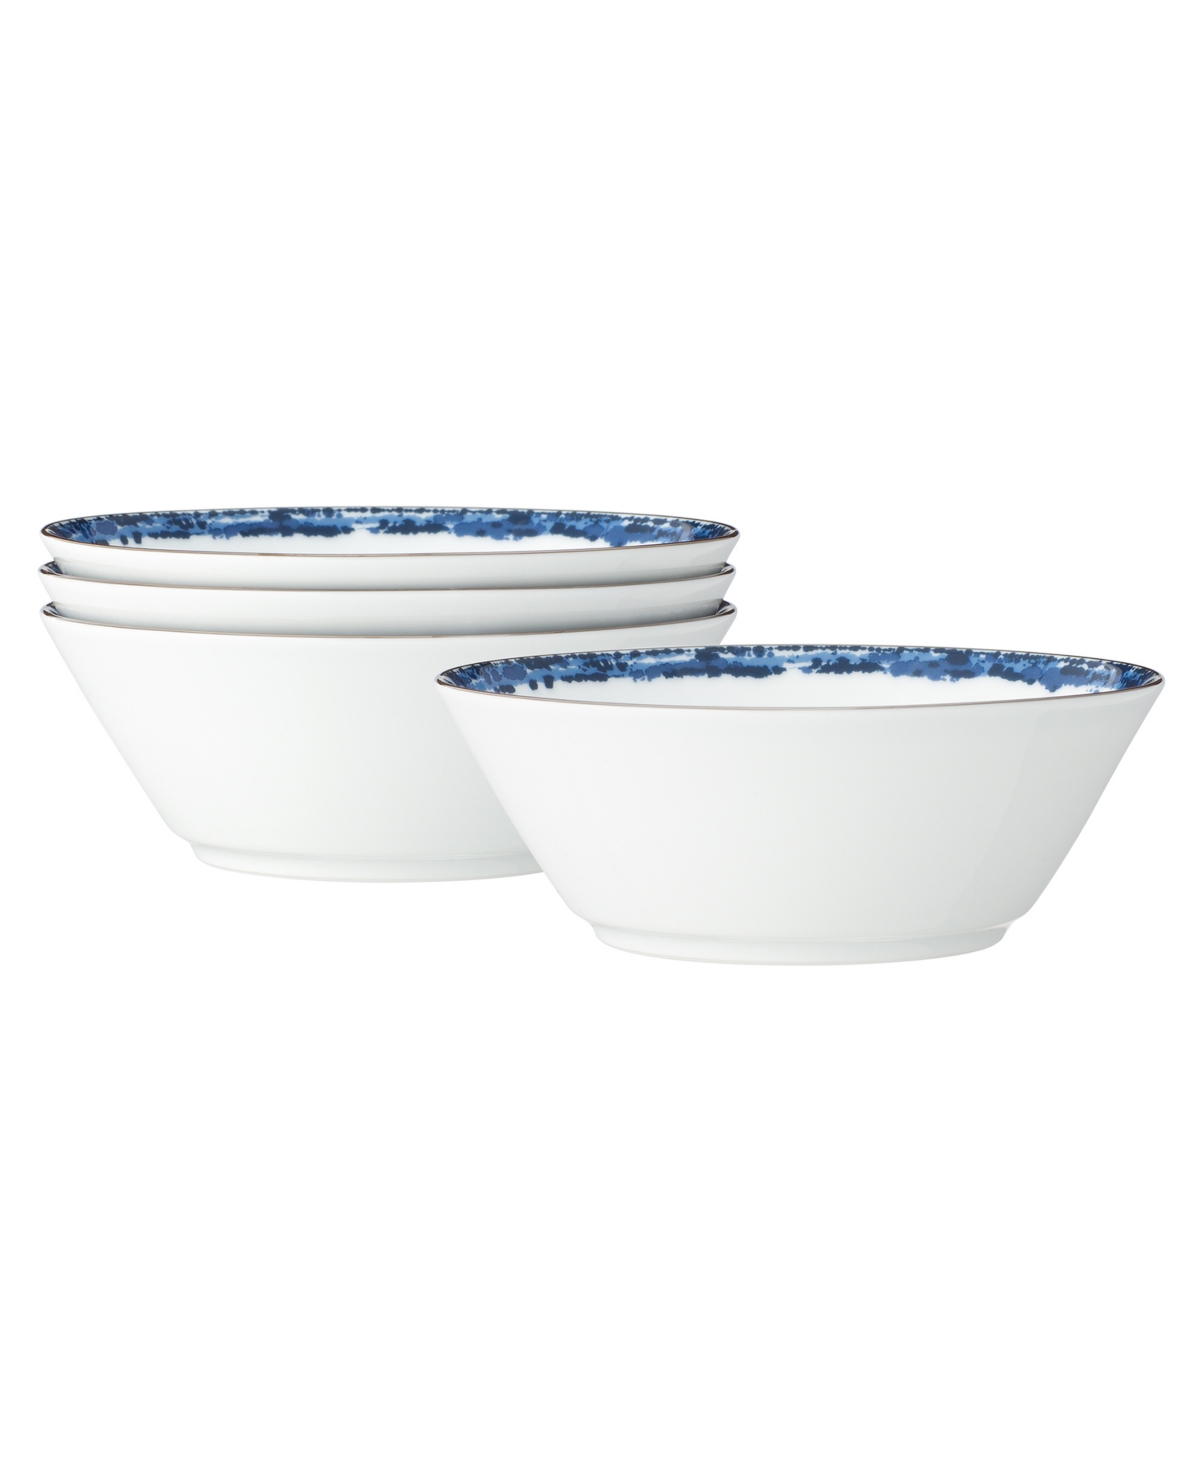 Noritake Rill 4 Piece Fruit Bowl Set, Service For 4 In Blue